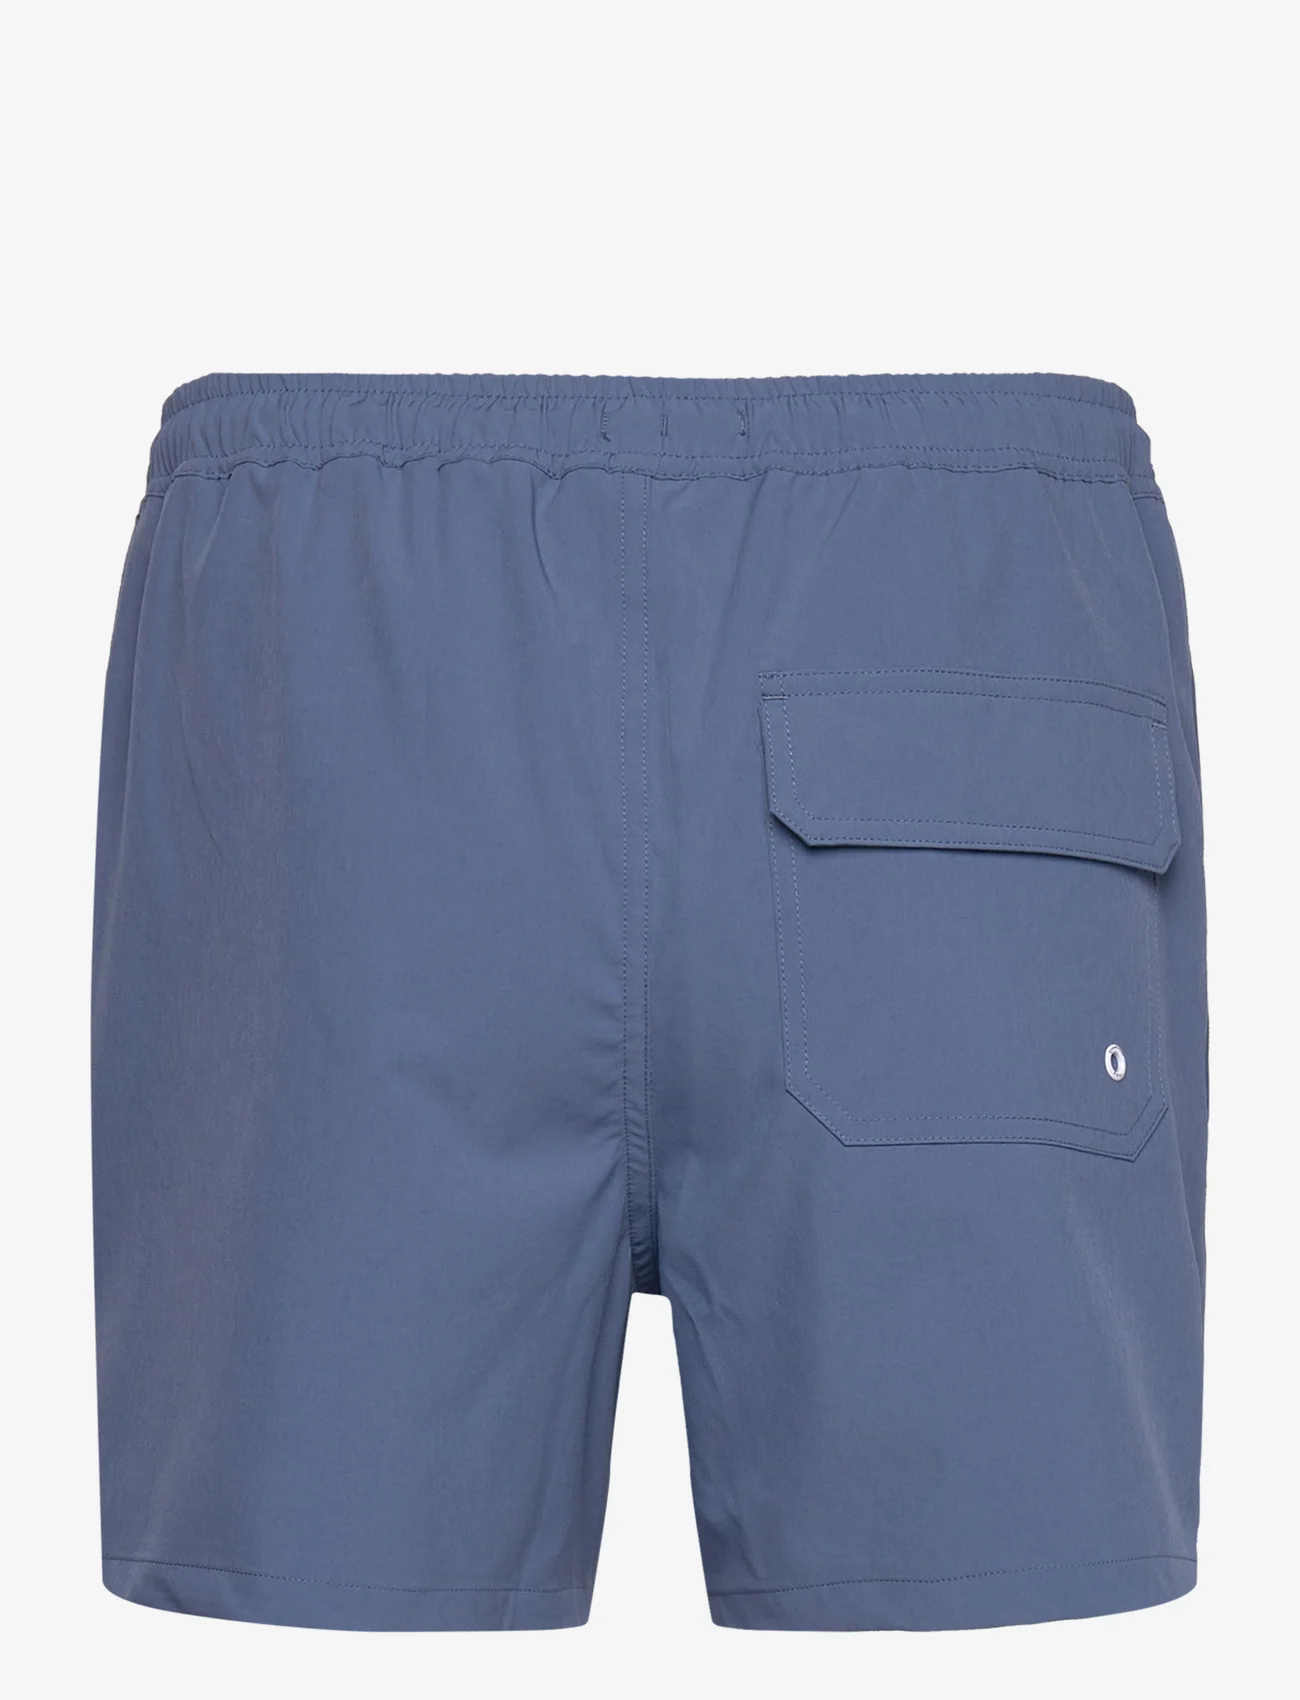 Knowledge Cotton Apparel - Stretch swimshorts - GRS/Vegan - swim shorts - moonlight blue - 1